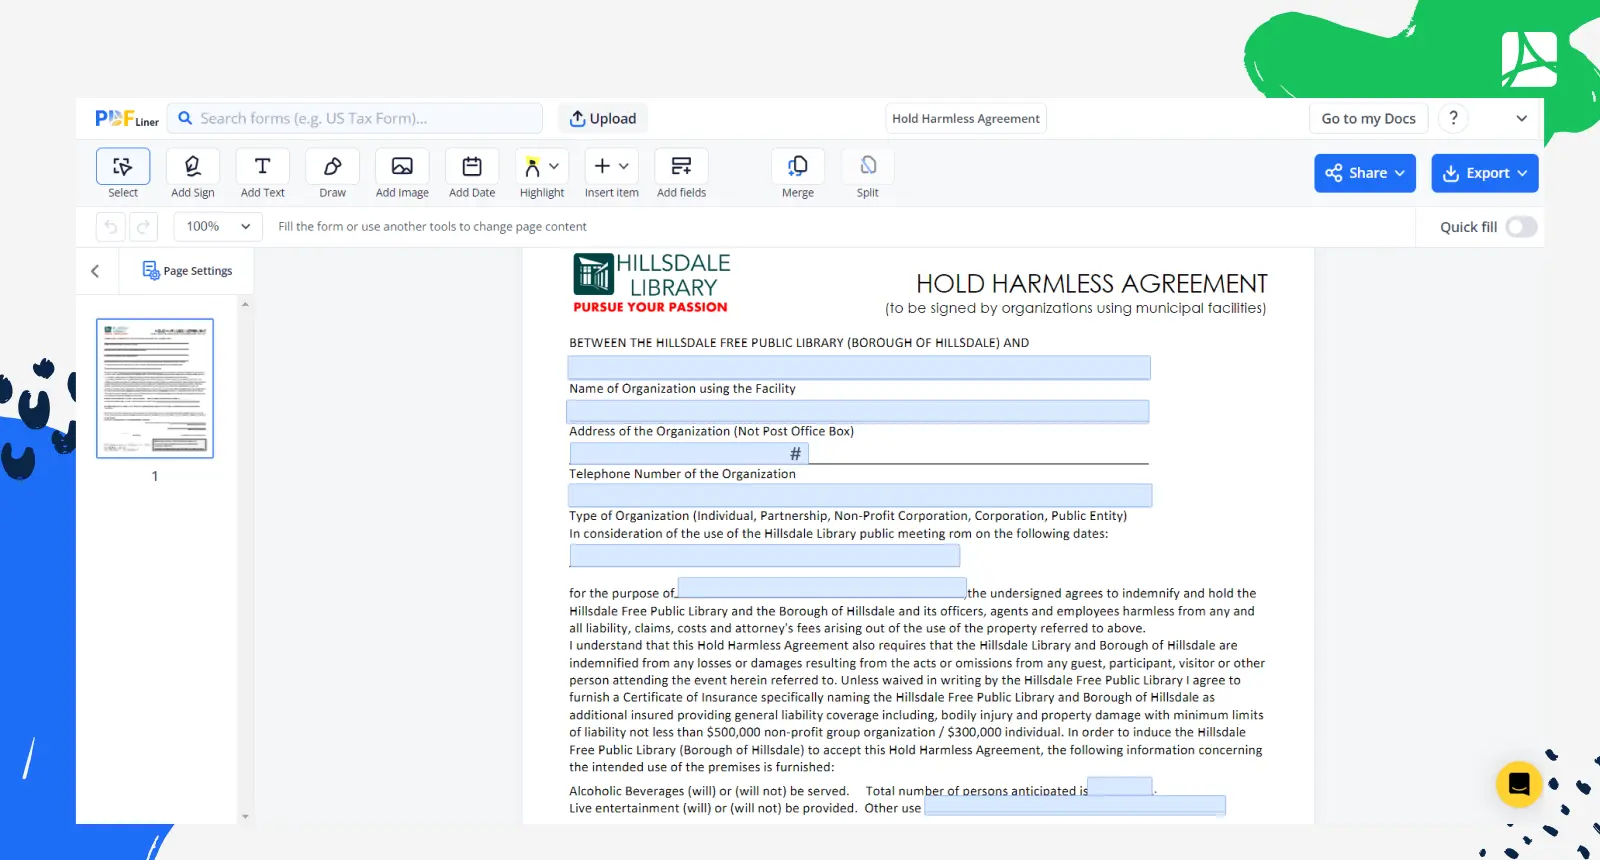 Hold Harmless Agreement Form Screenshot